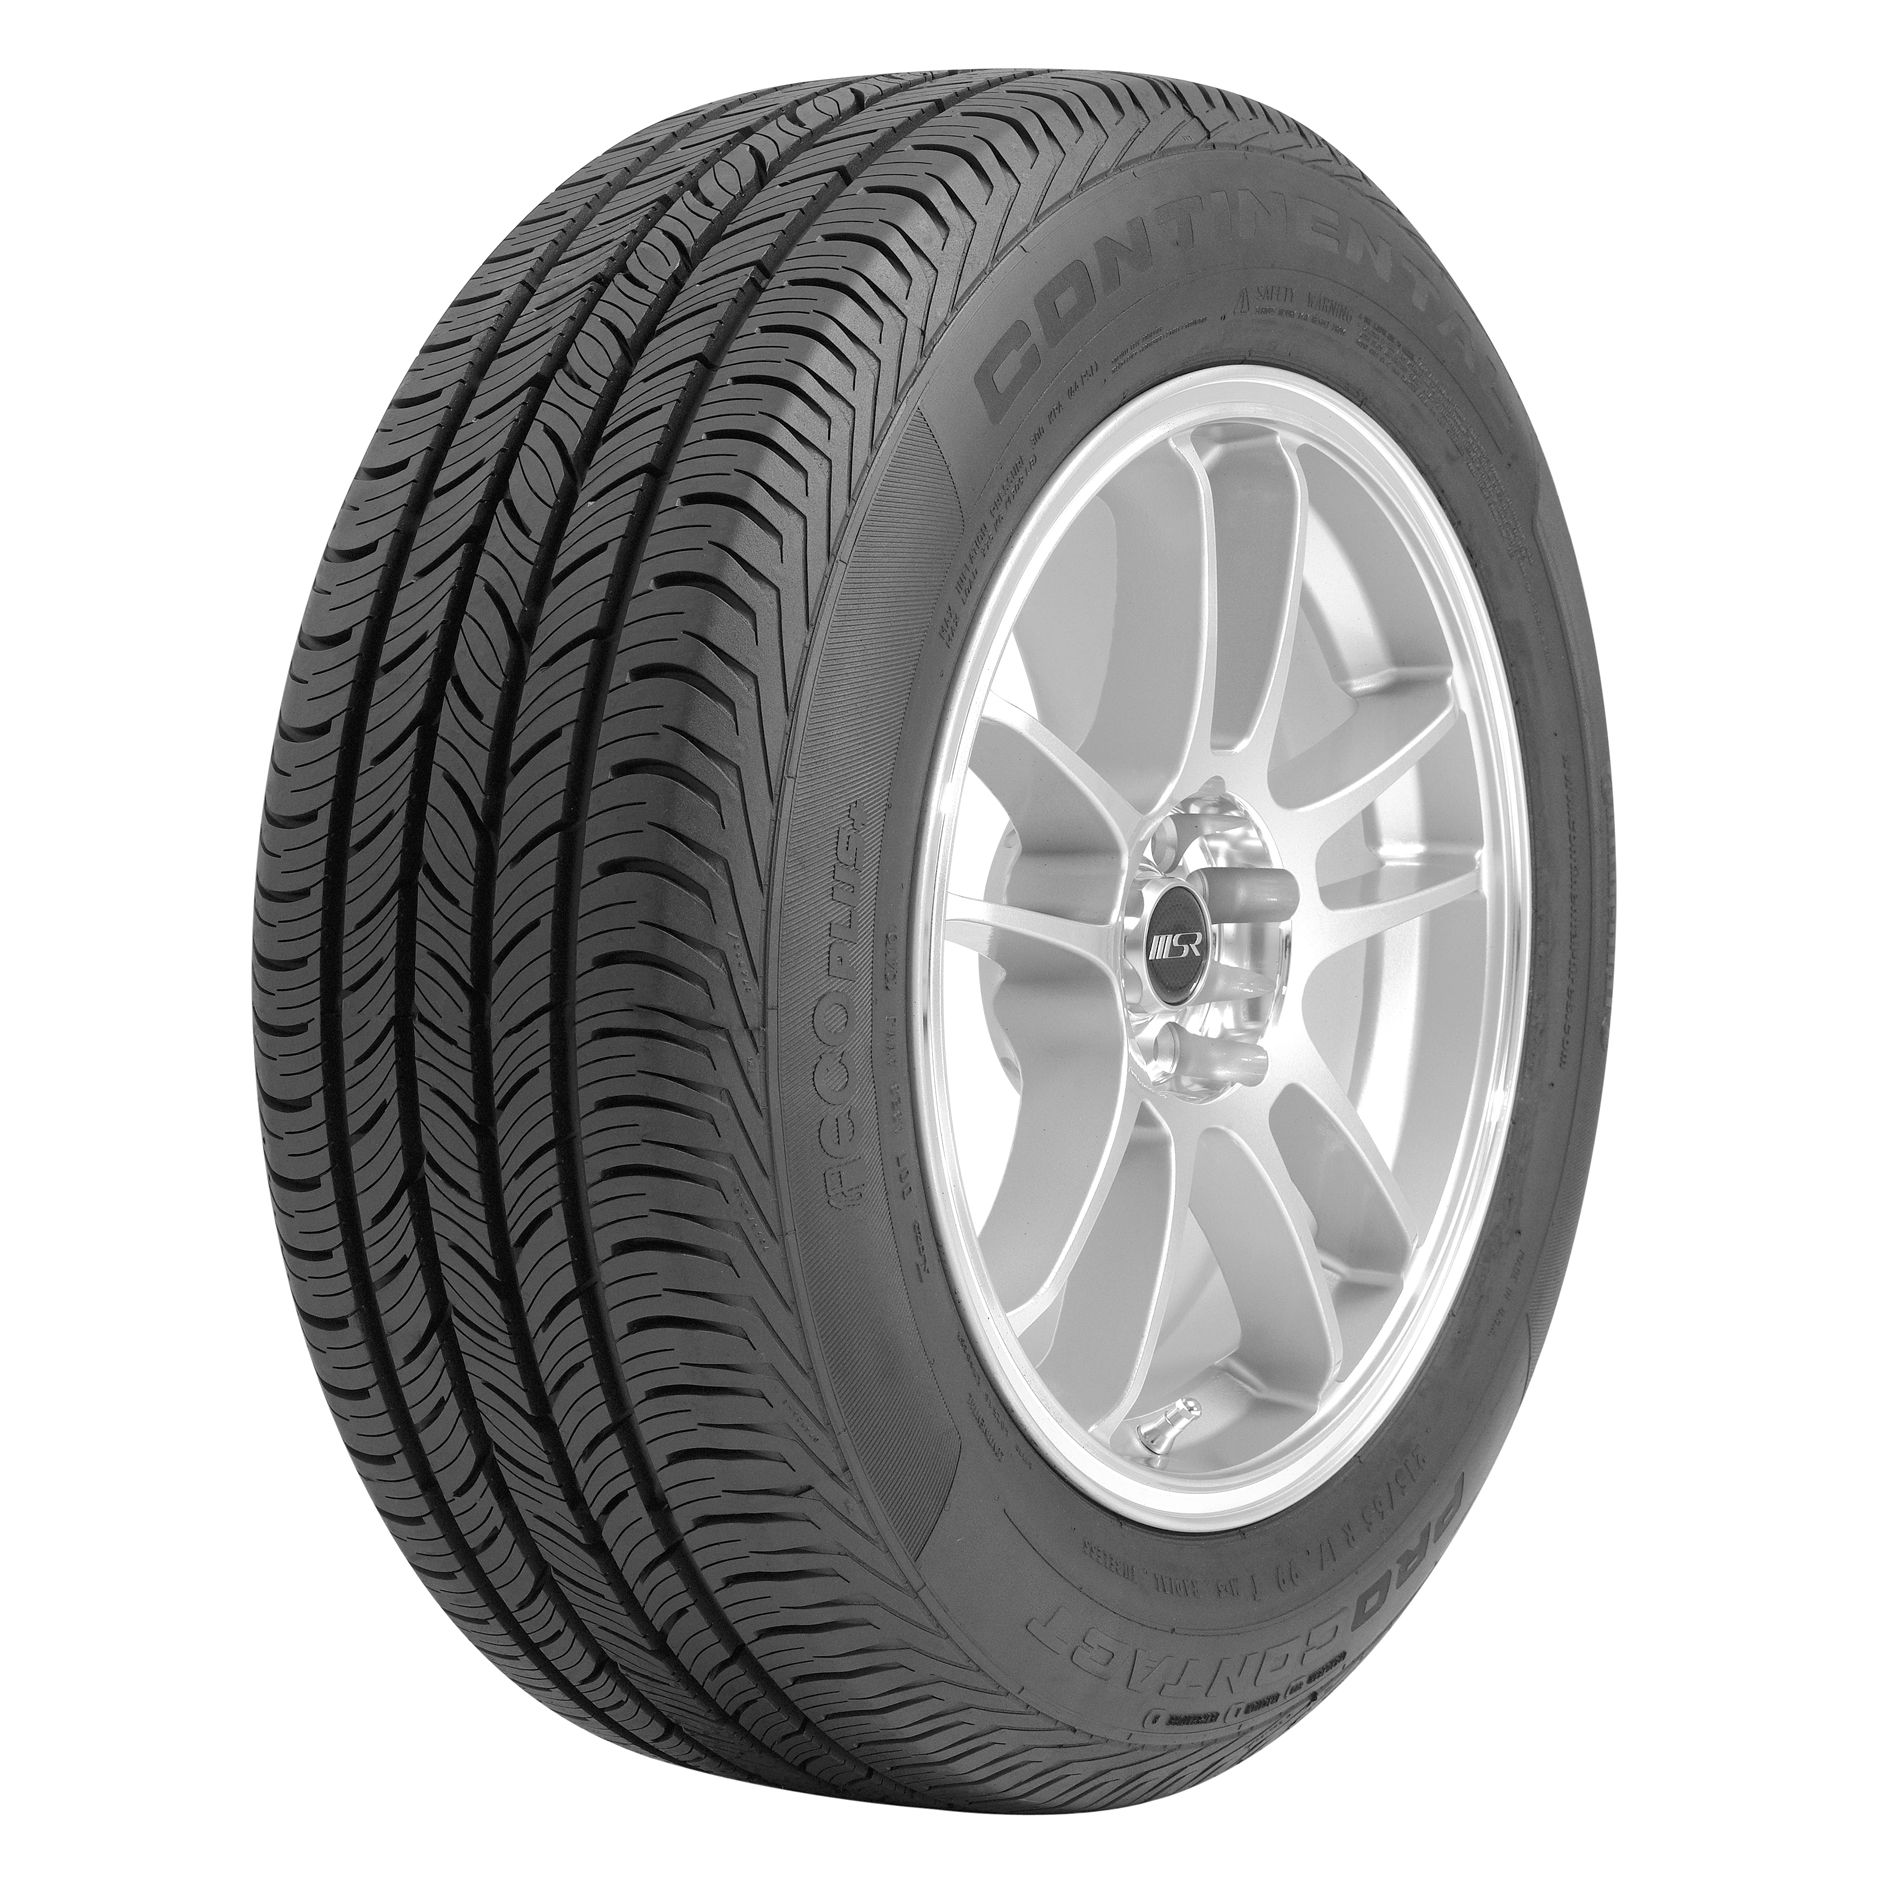 Continental Pro Contact Eco Plus - 205/65R16 95T BW - All-Season Tire